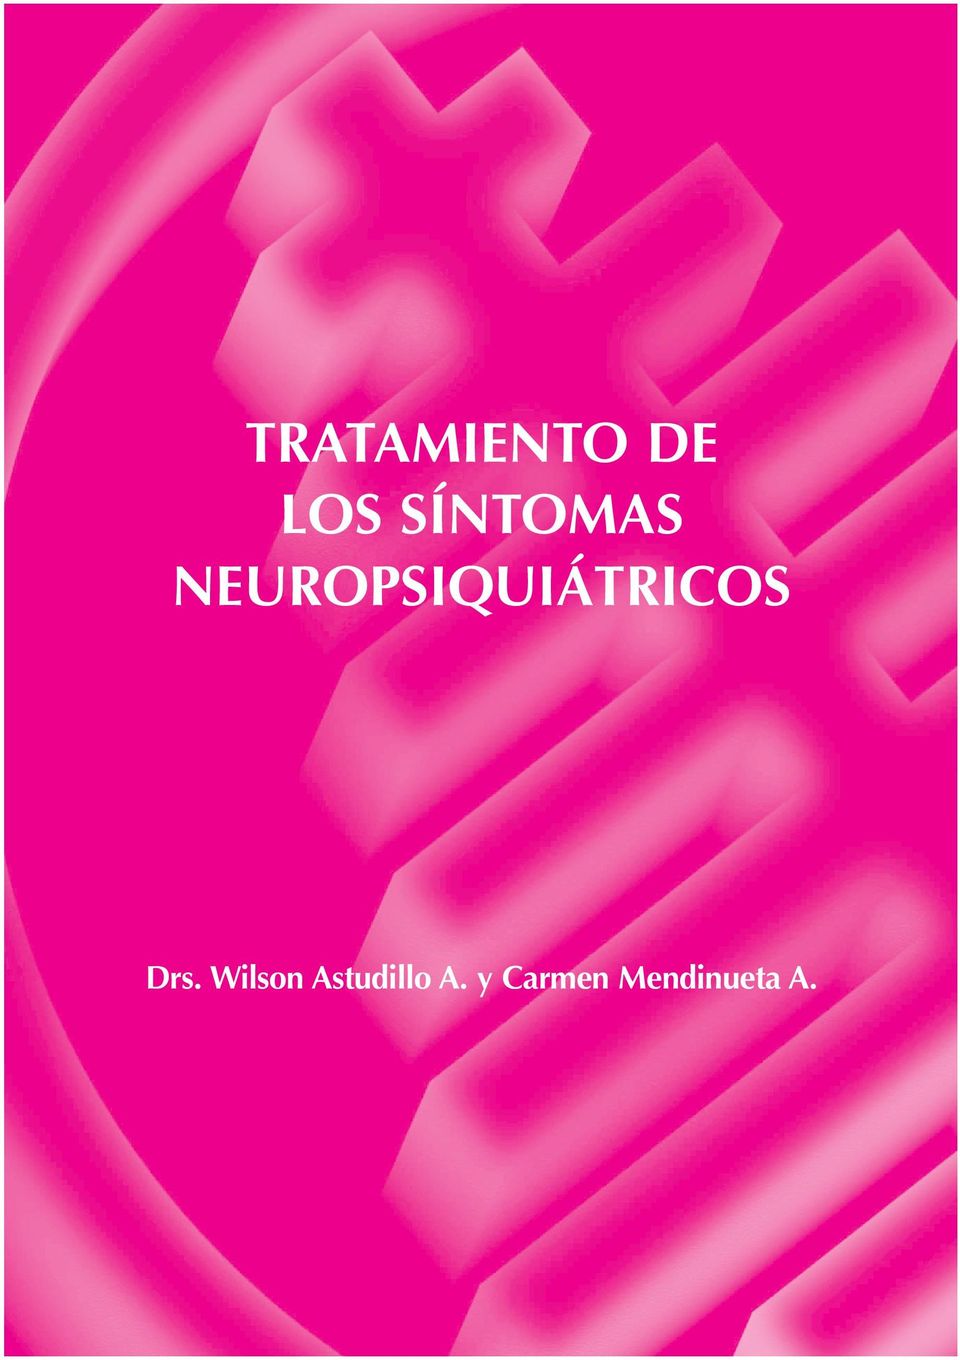 NEUROPSIQUIÁTRICOS Drs.